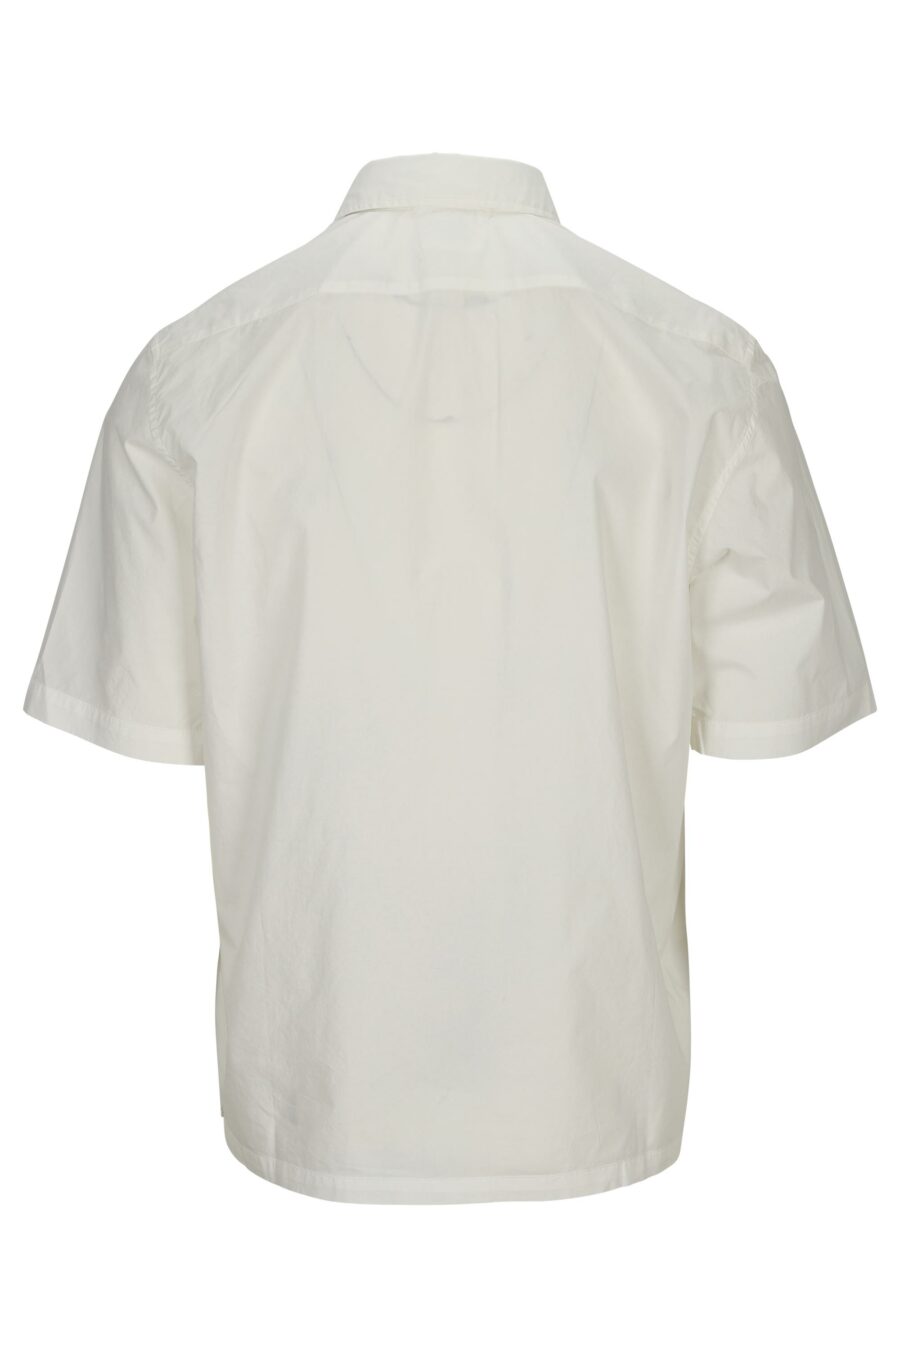 Camisa blanca manga corta con bolsillo y minilogo - 7620943694826 1